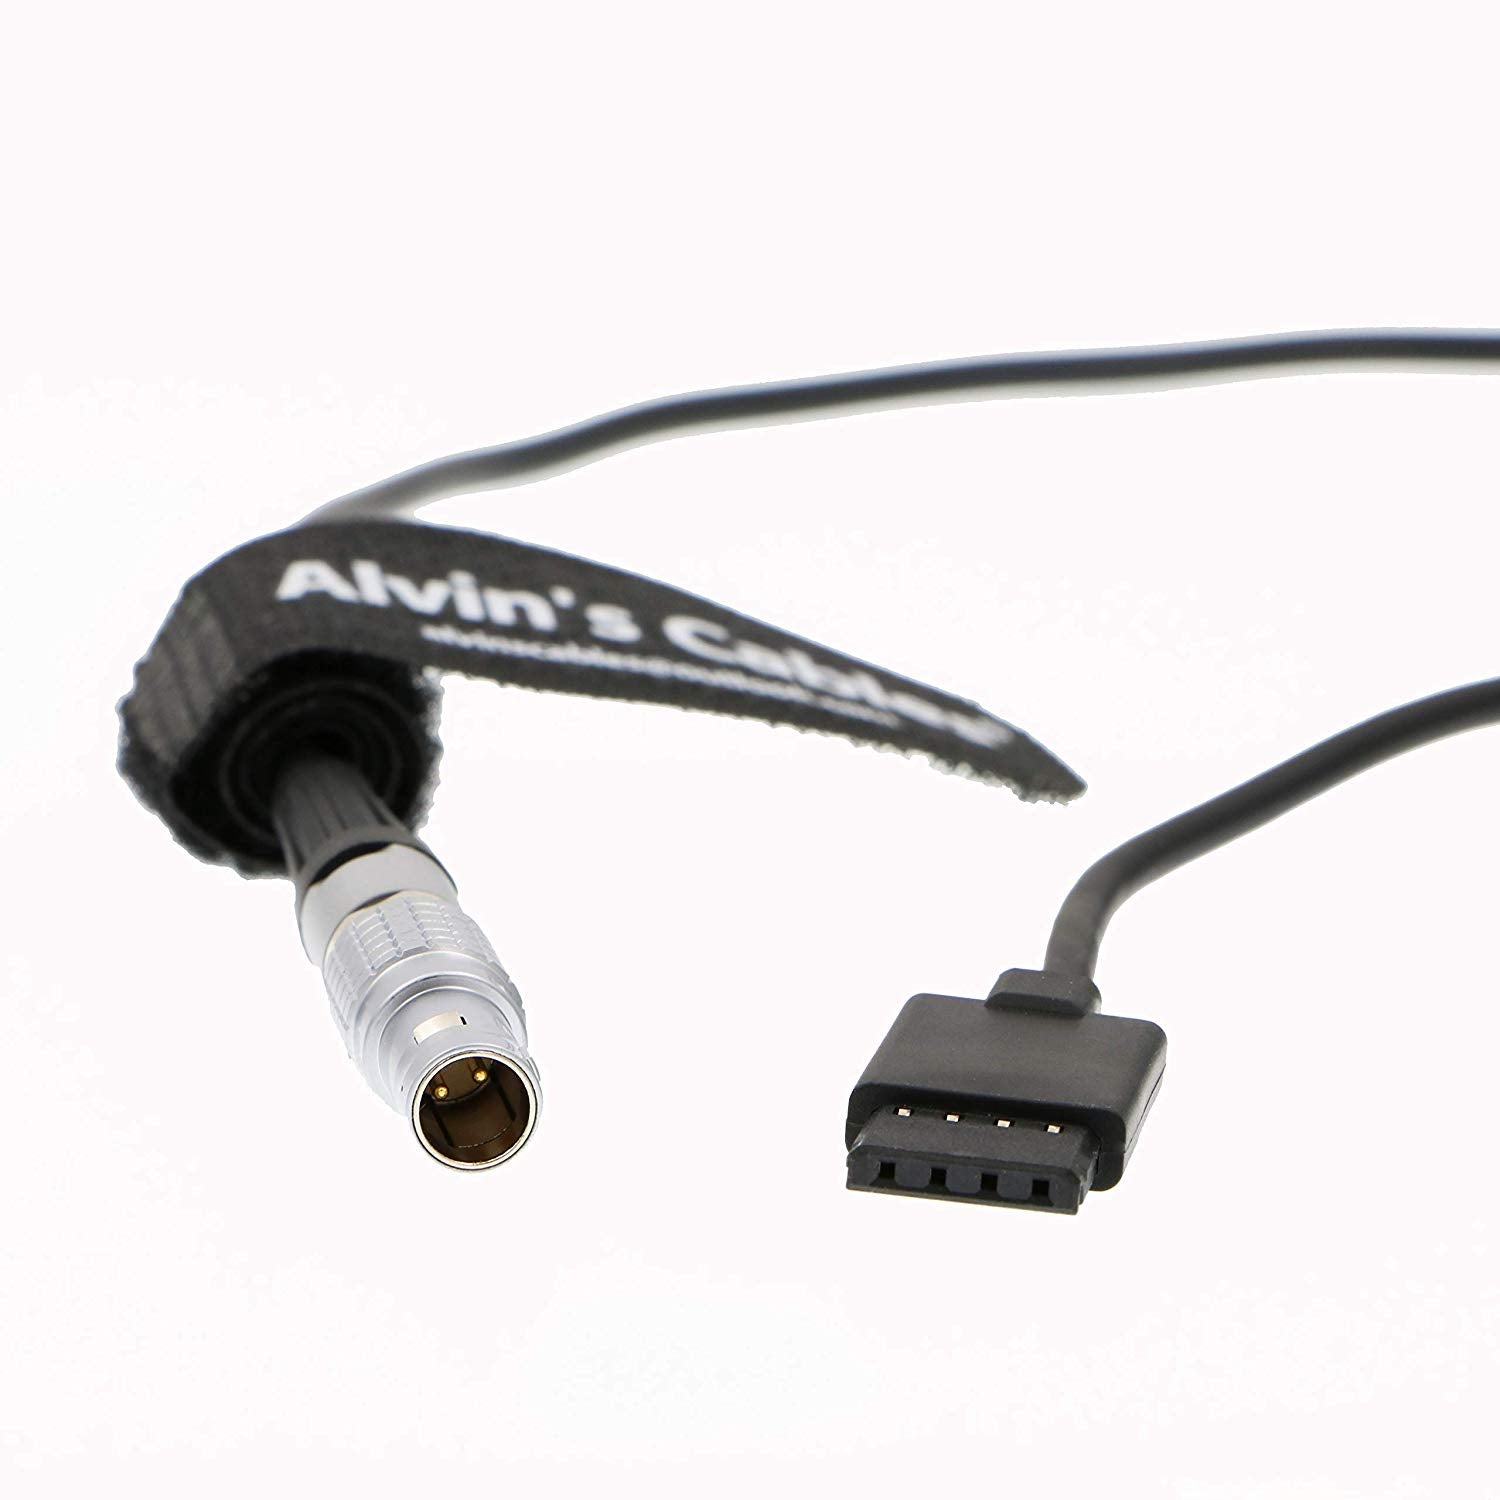 Alvin's Cables Ronin S 4-Pin auf 2-Pin Stromkabel für Cinegears Follow Focus